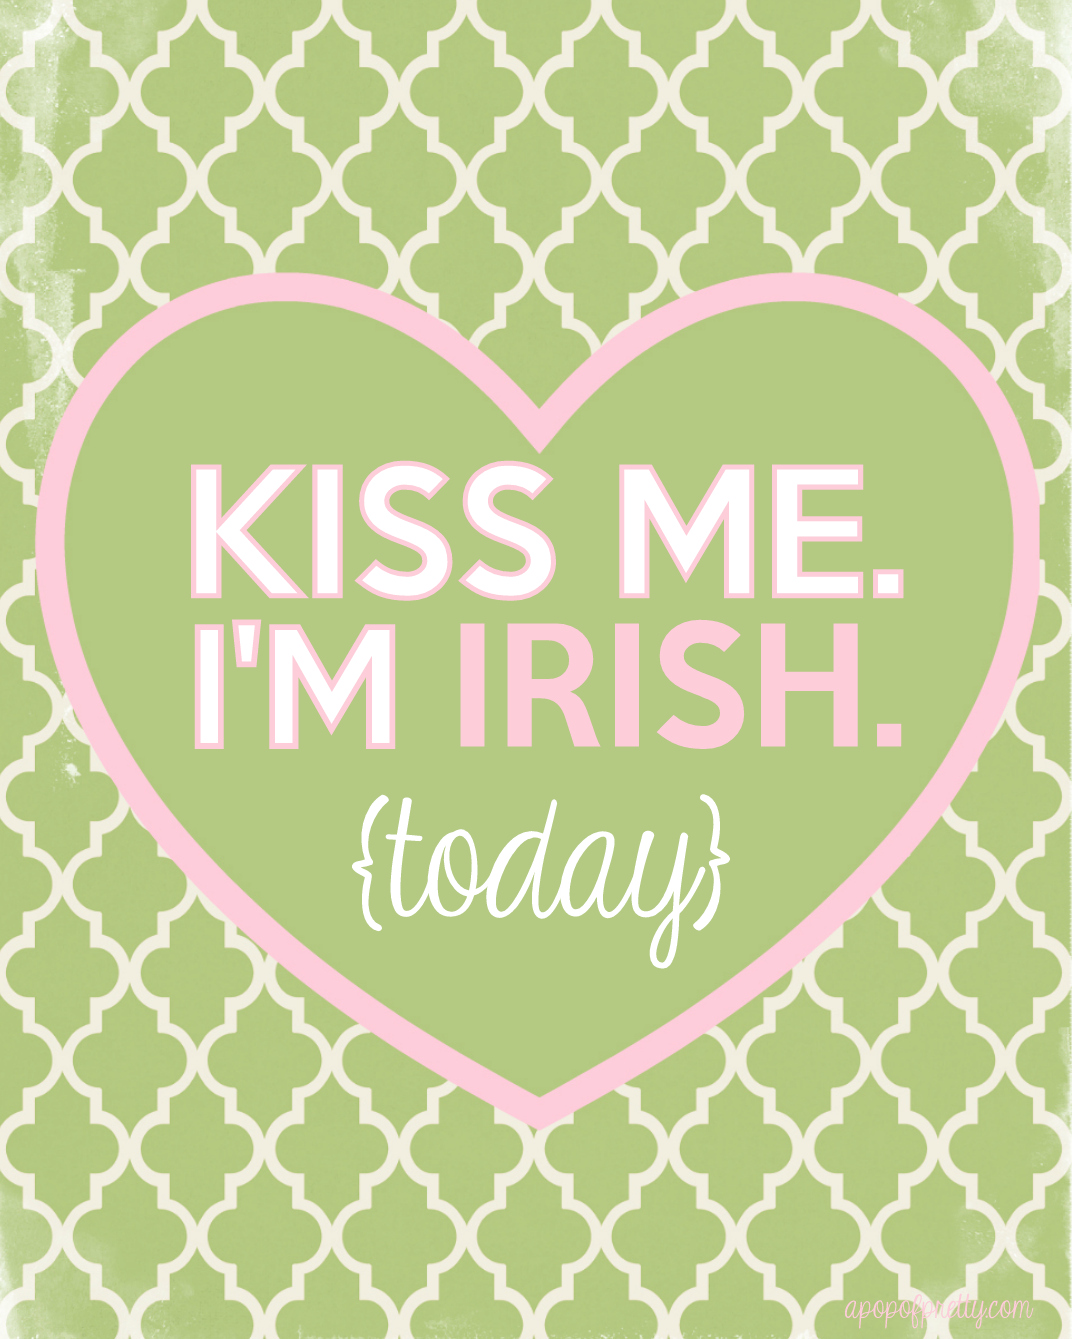 St Patricks Day Kiss me I'm Irish printable 2013-300dpi